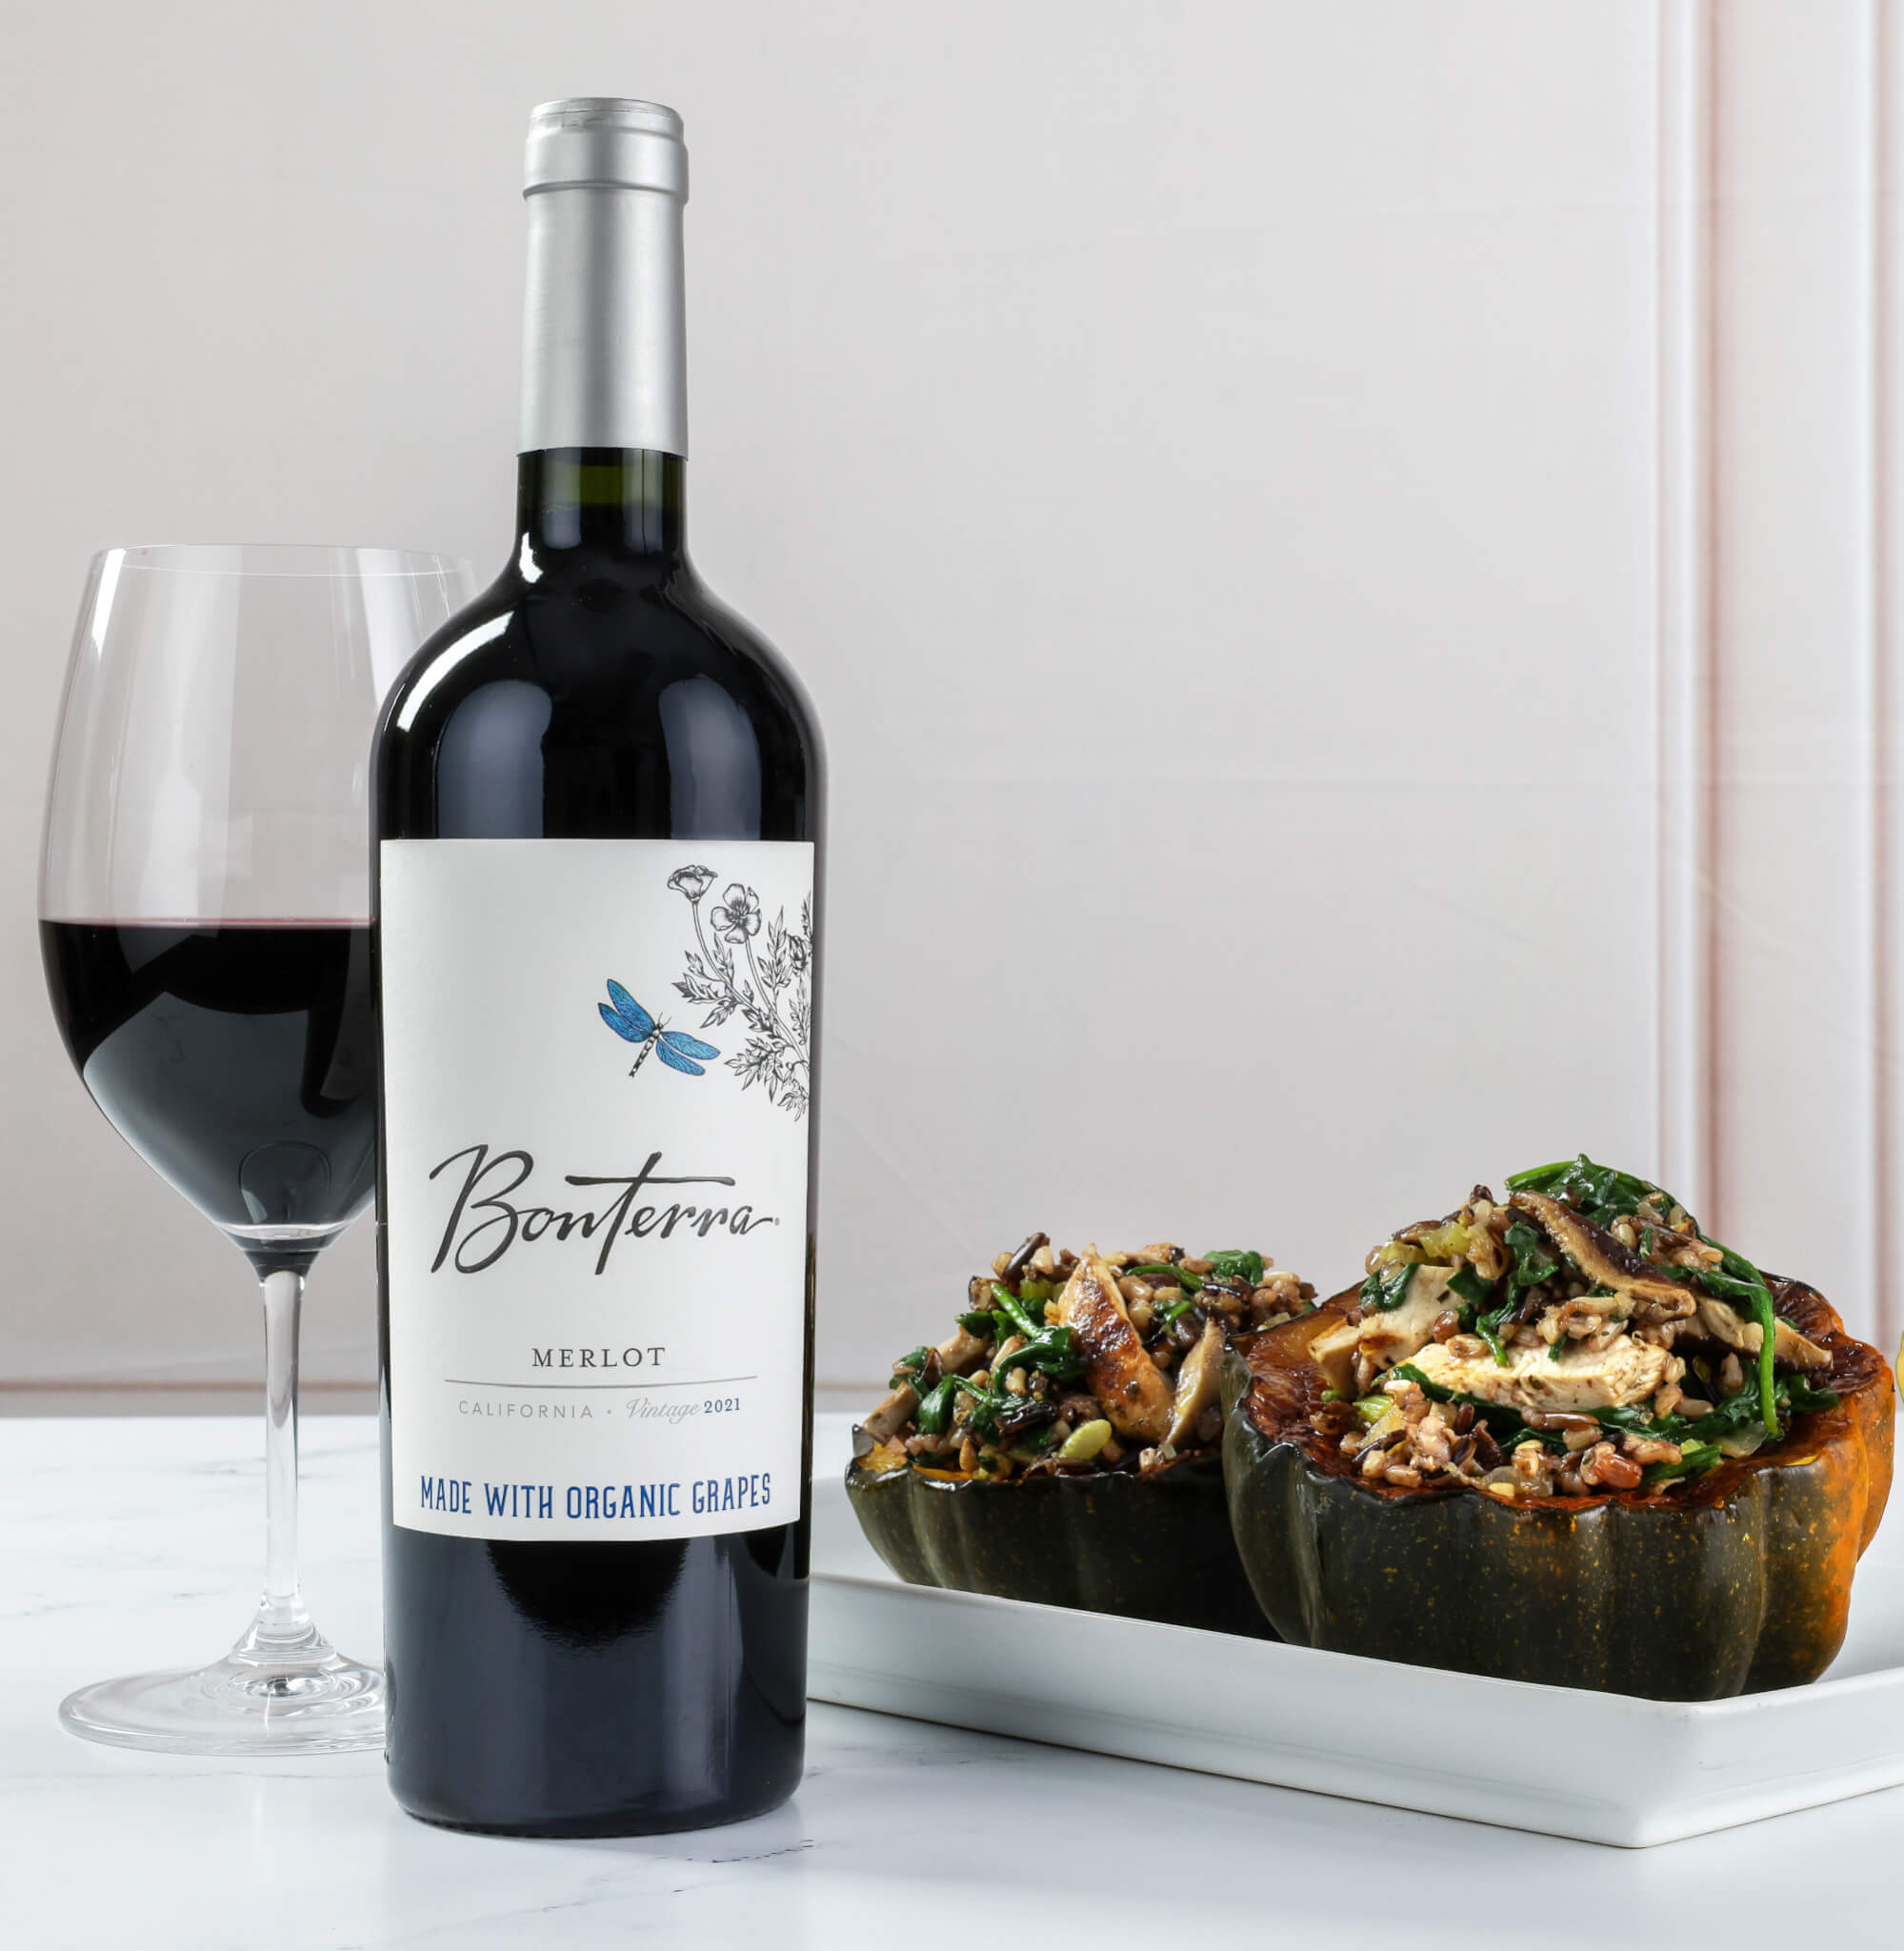 Bottle shot of 2021 Bonterra Merlot red wine, with stuffed squash dish on the side